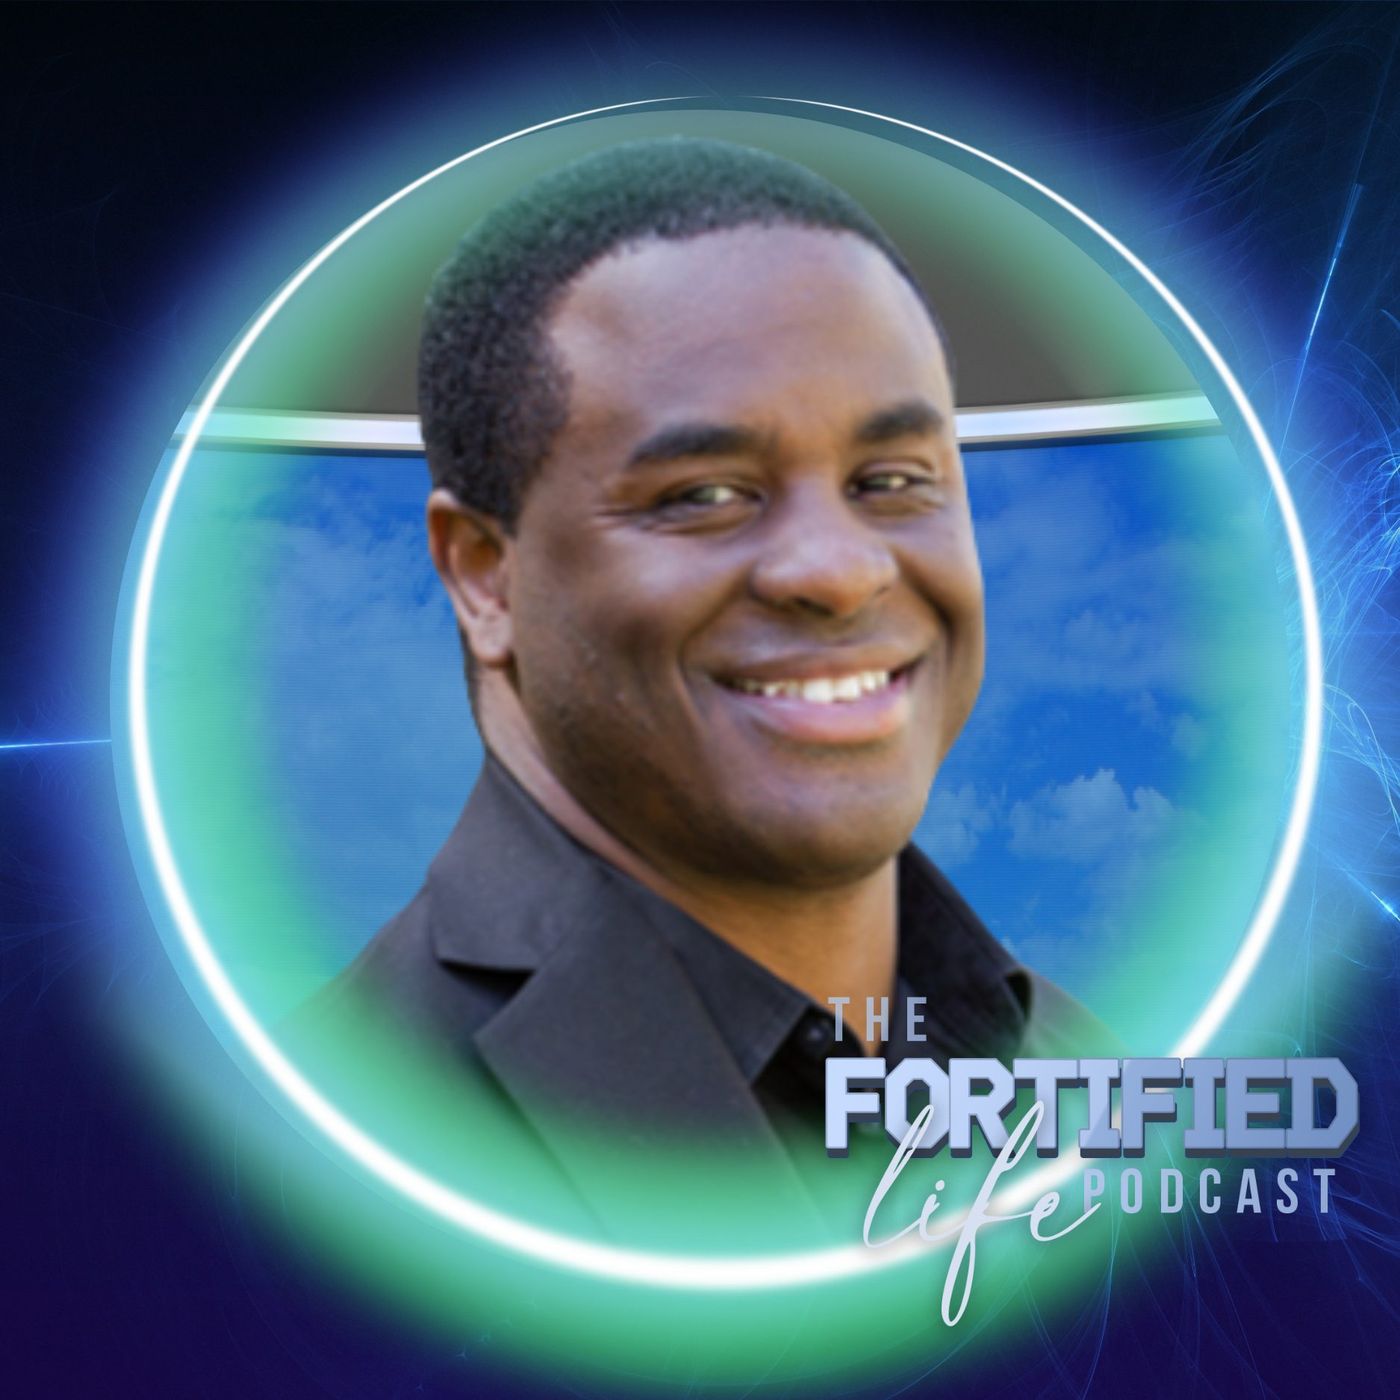 The Fortified Life Podcast with Jason Davis - EP 135 w/ Apostle John E. Ross | Gospel Artist & award winning radio host & podcaster